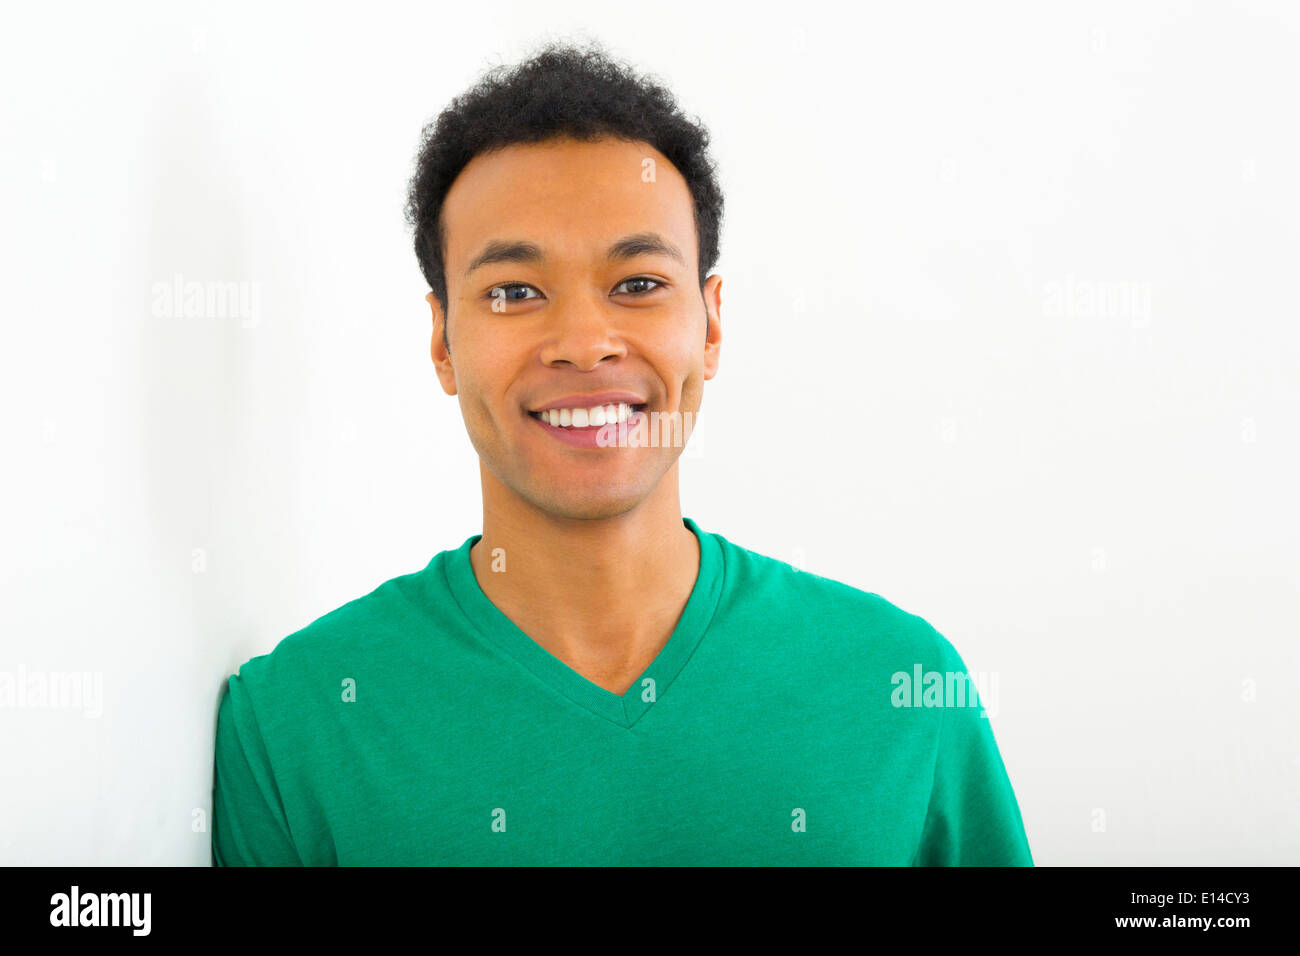 Mixed race man smiling Stock Photo